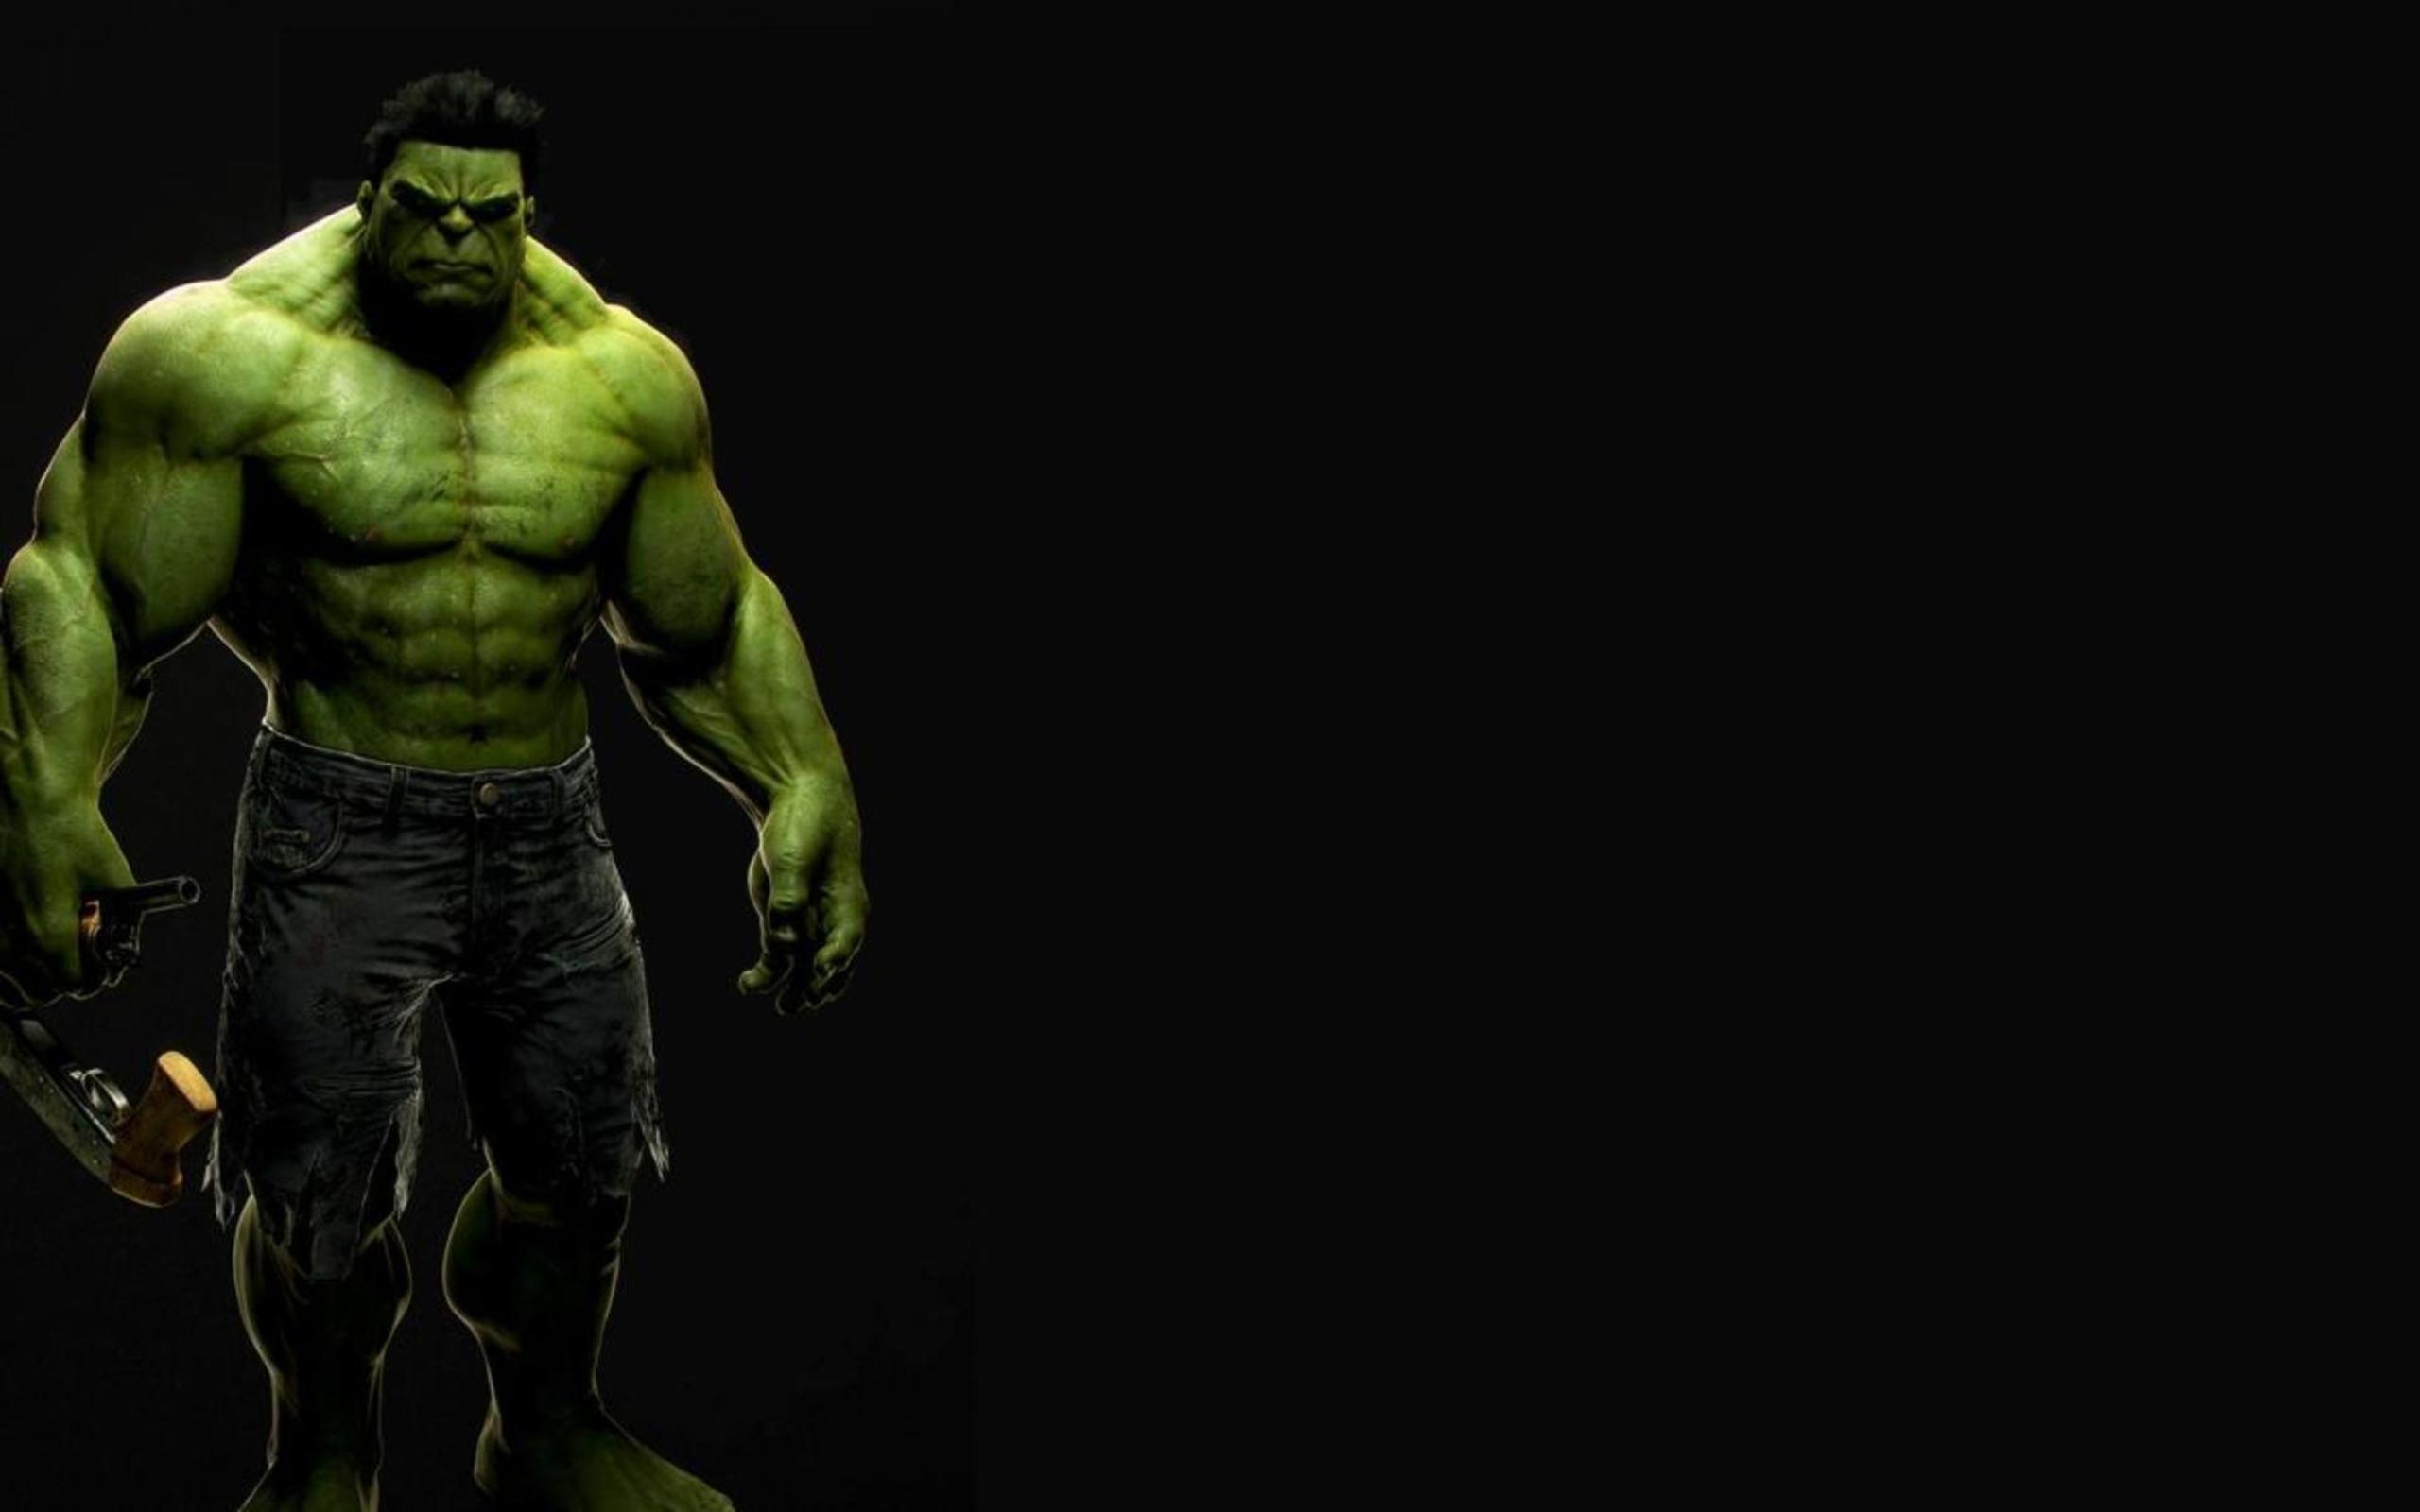 Green beast marvel comics the avengers (movie) black background hulk